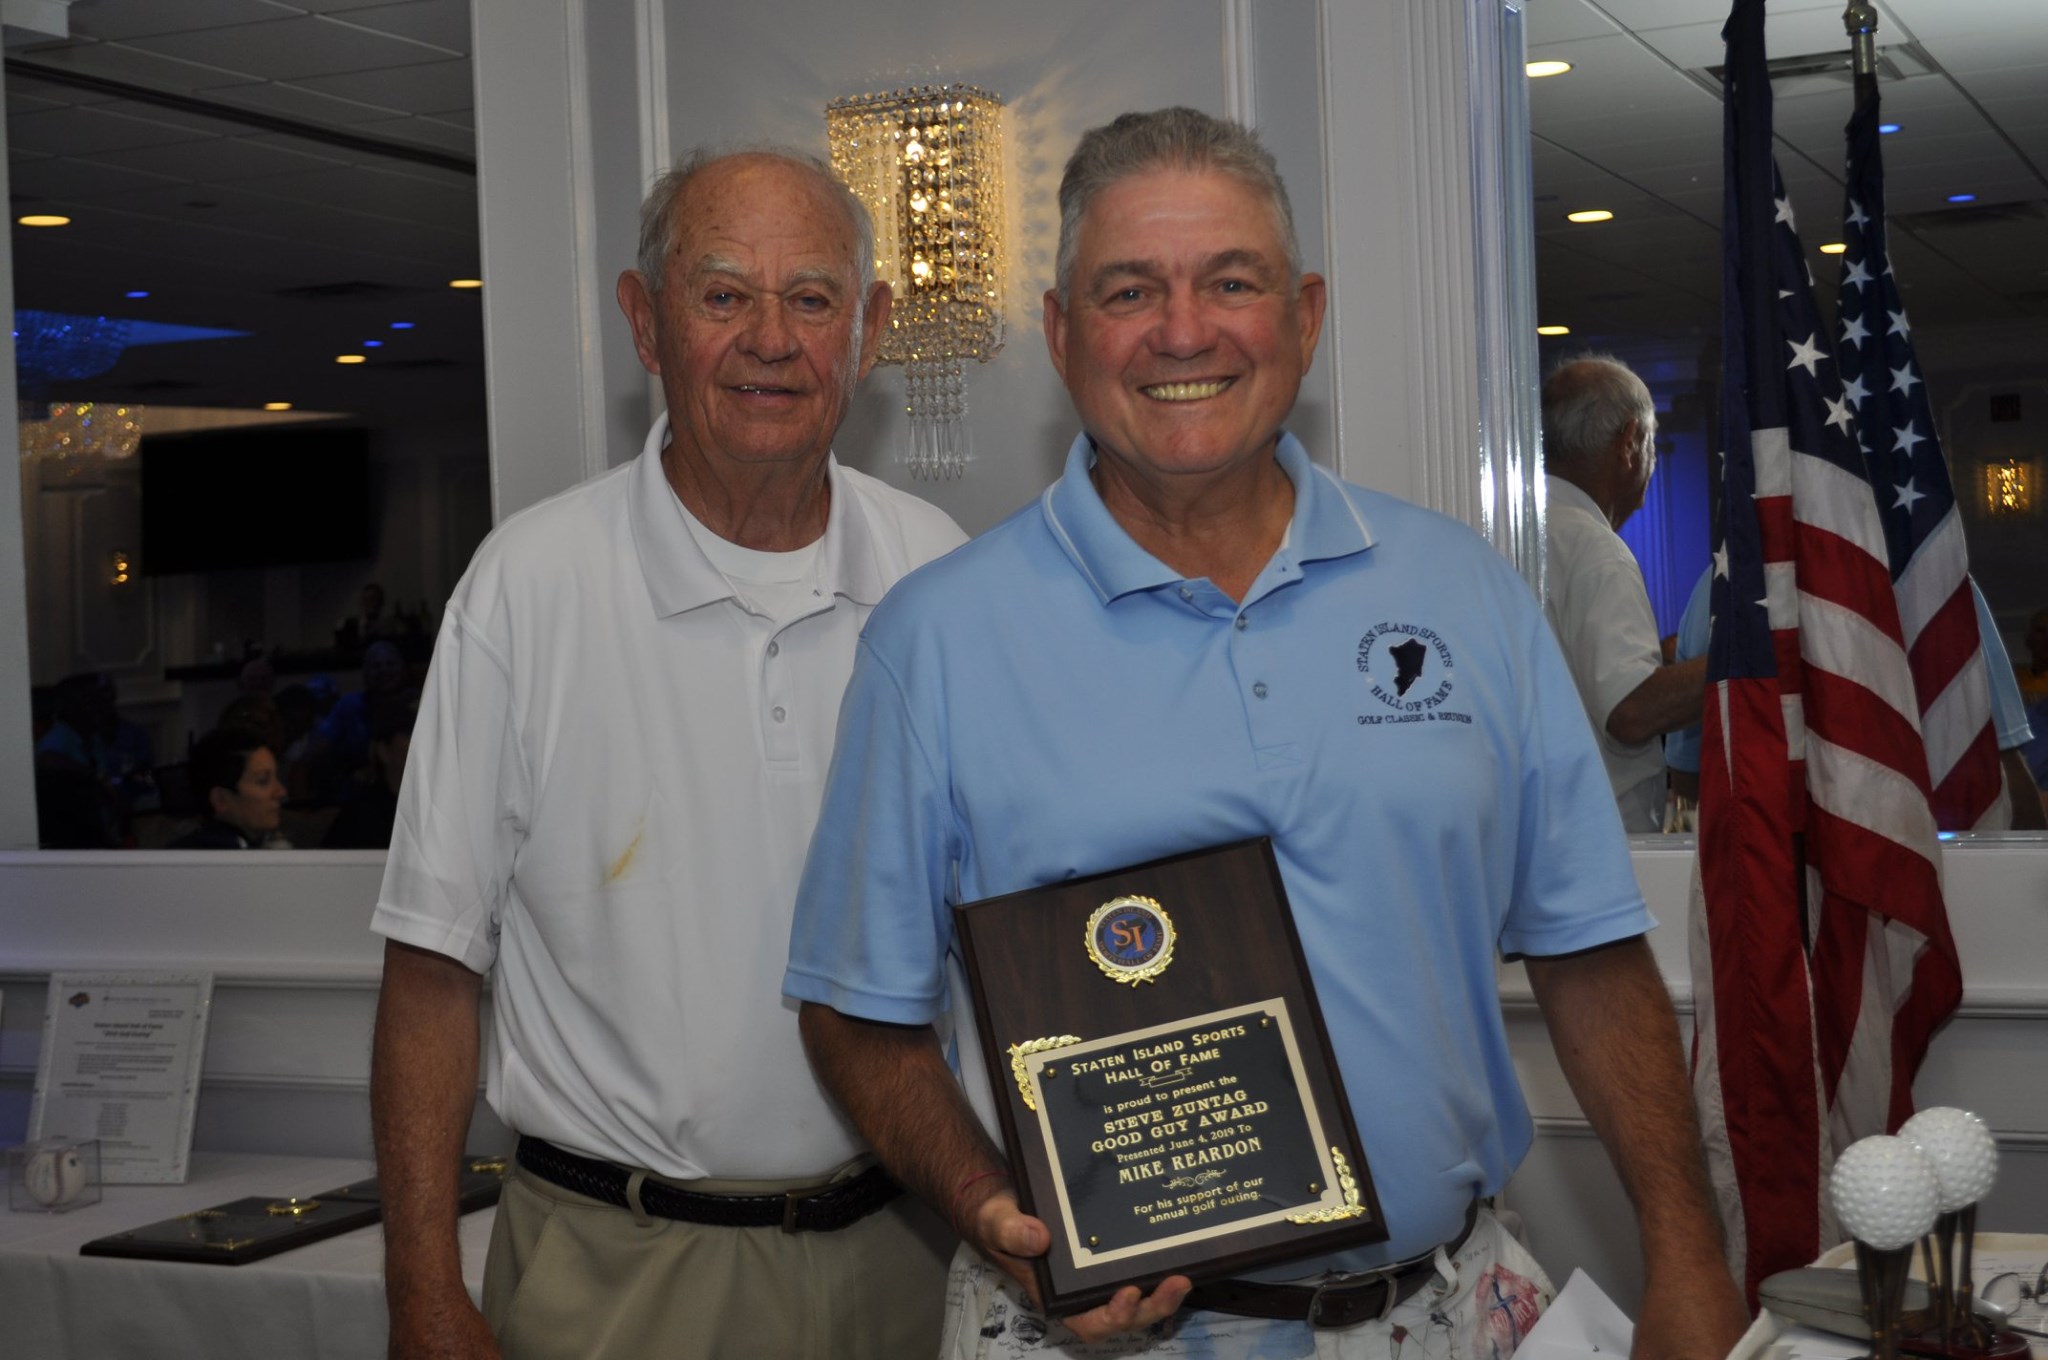 Golf chairman John Woodman Sr. (left) with Mike Reardon (right), a Steve Zuntag Good Guy Award winner.